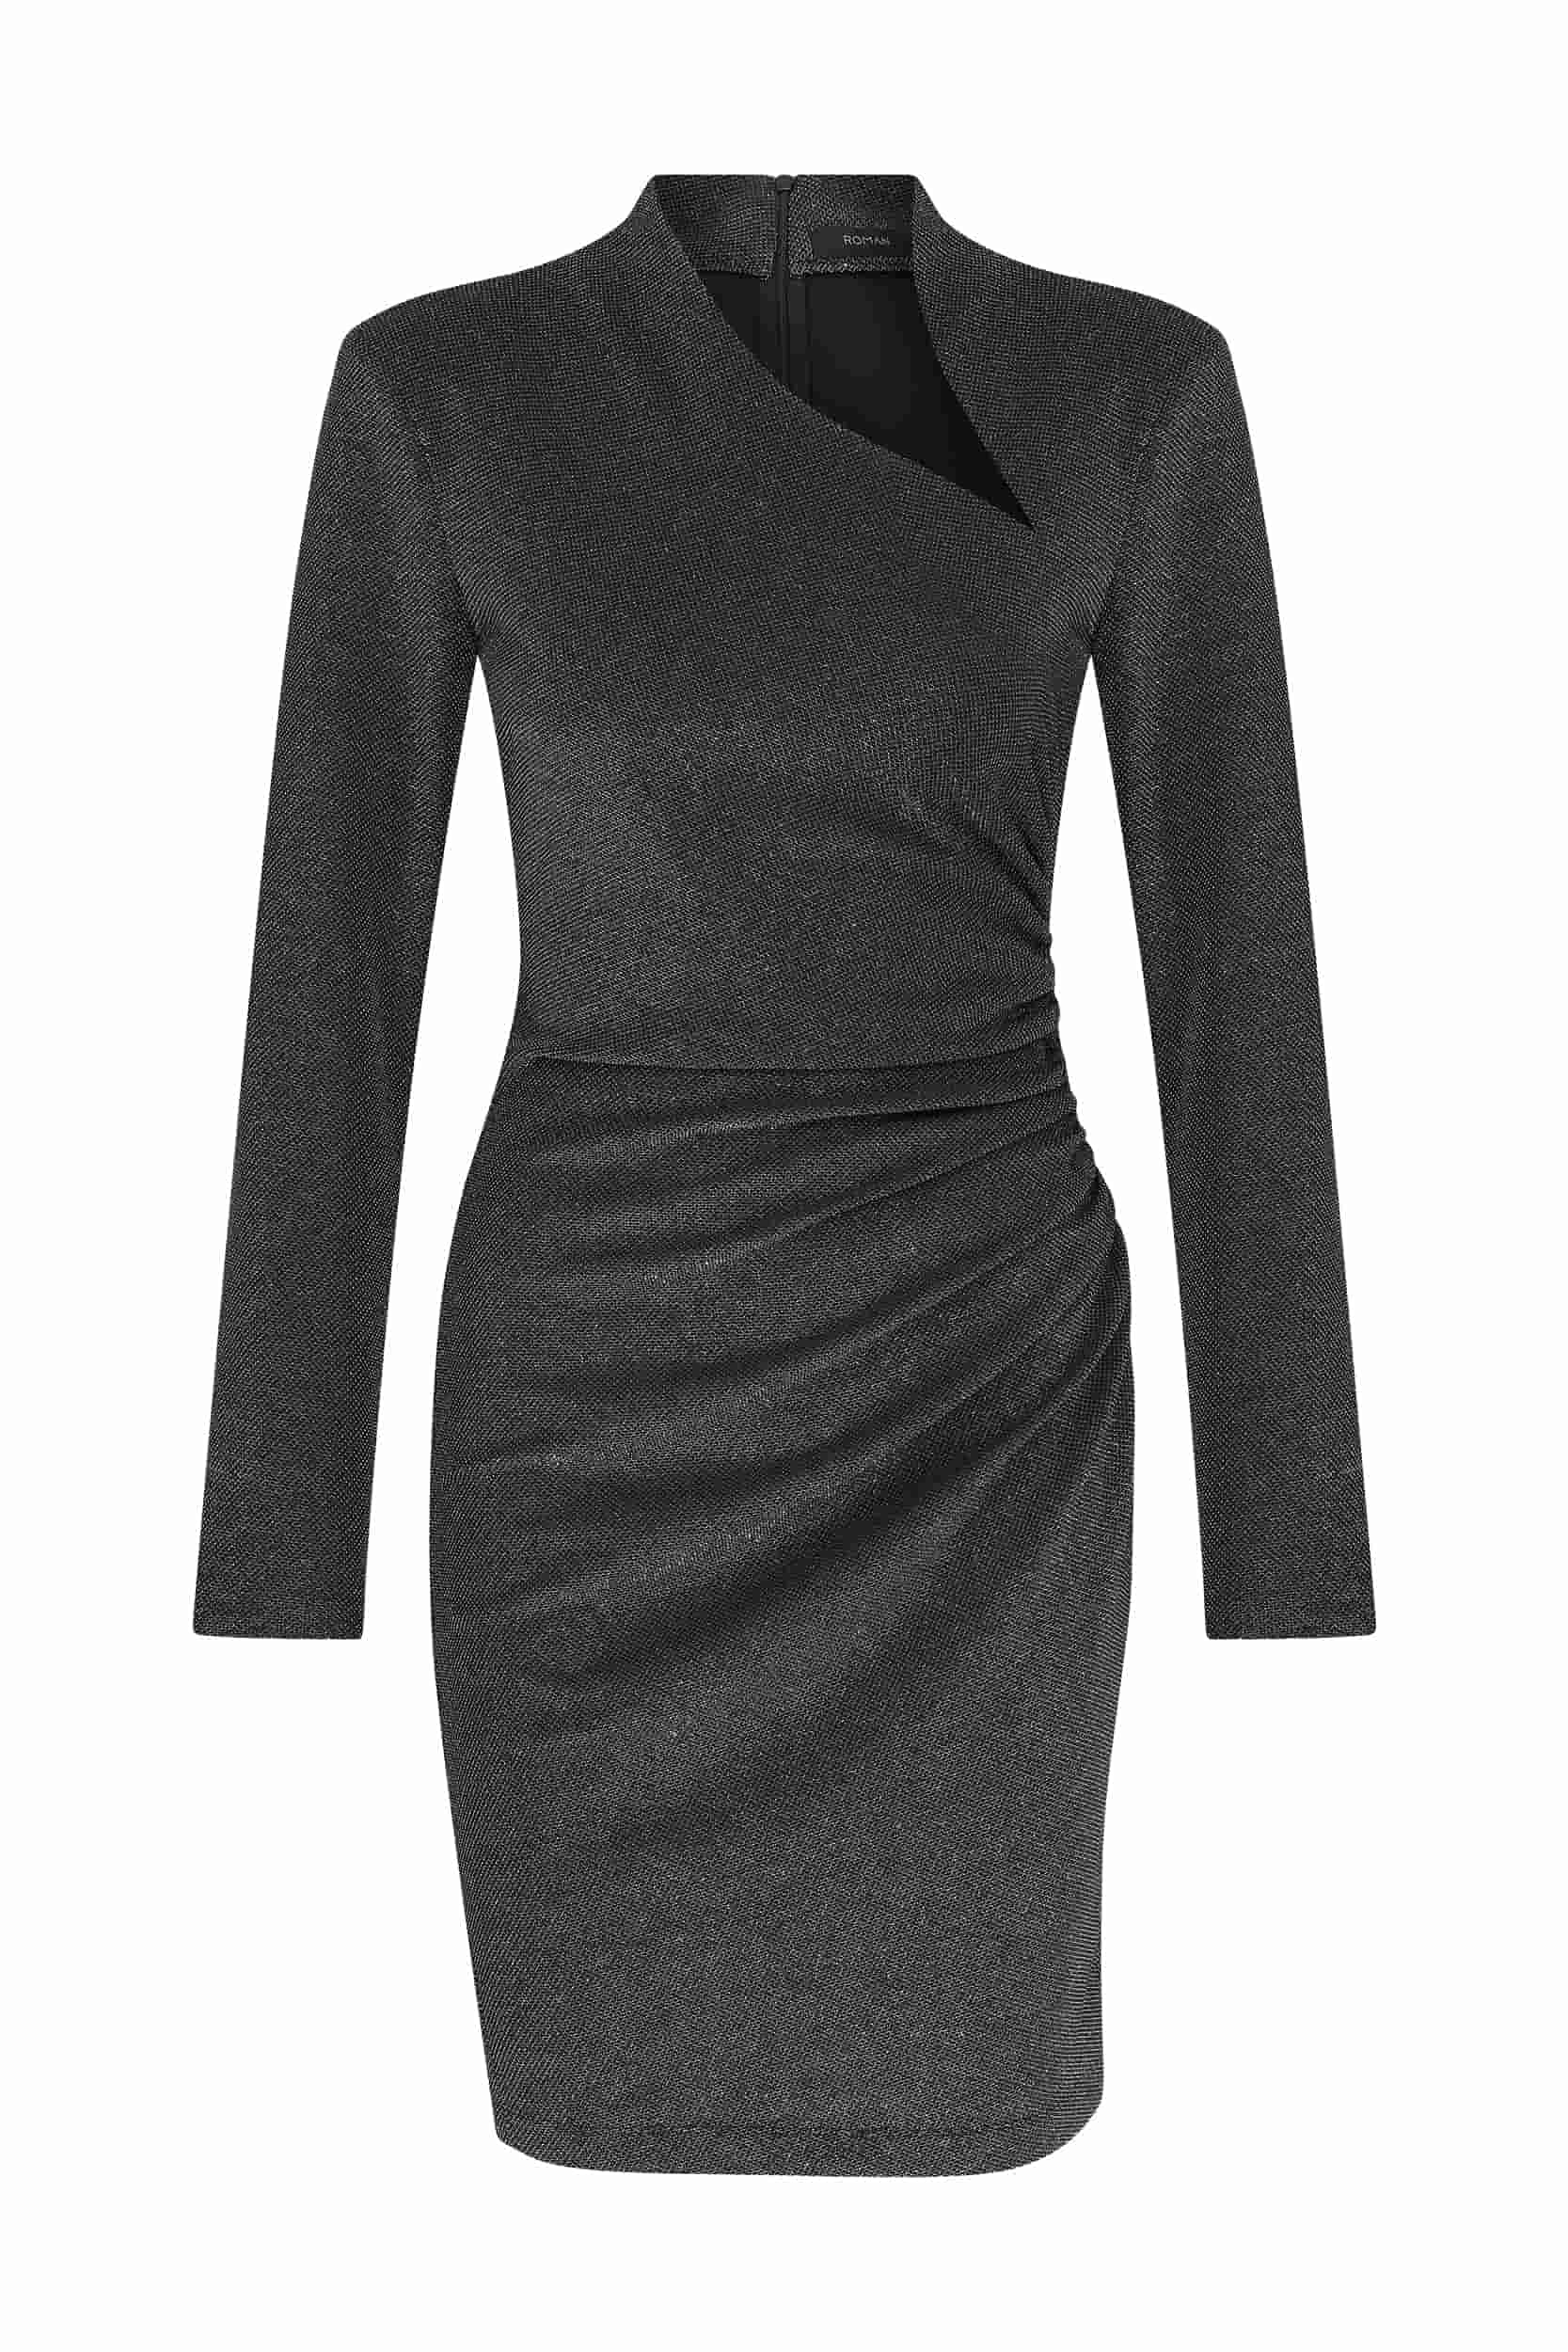 Shimmer Ruched Full Sleeve Cocktail Dress --[BLACK]